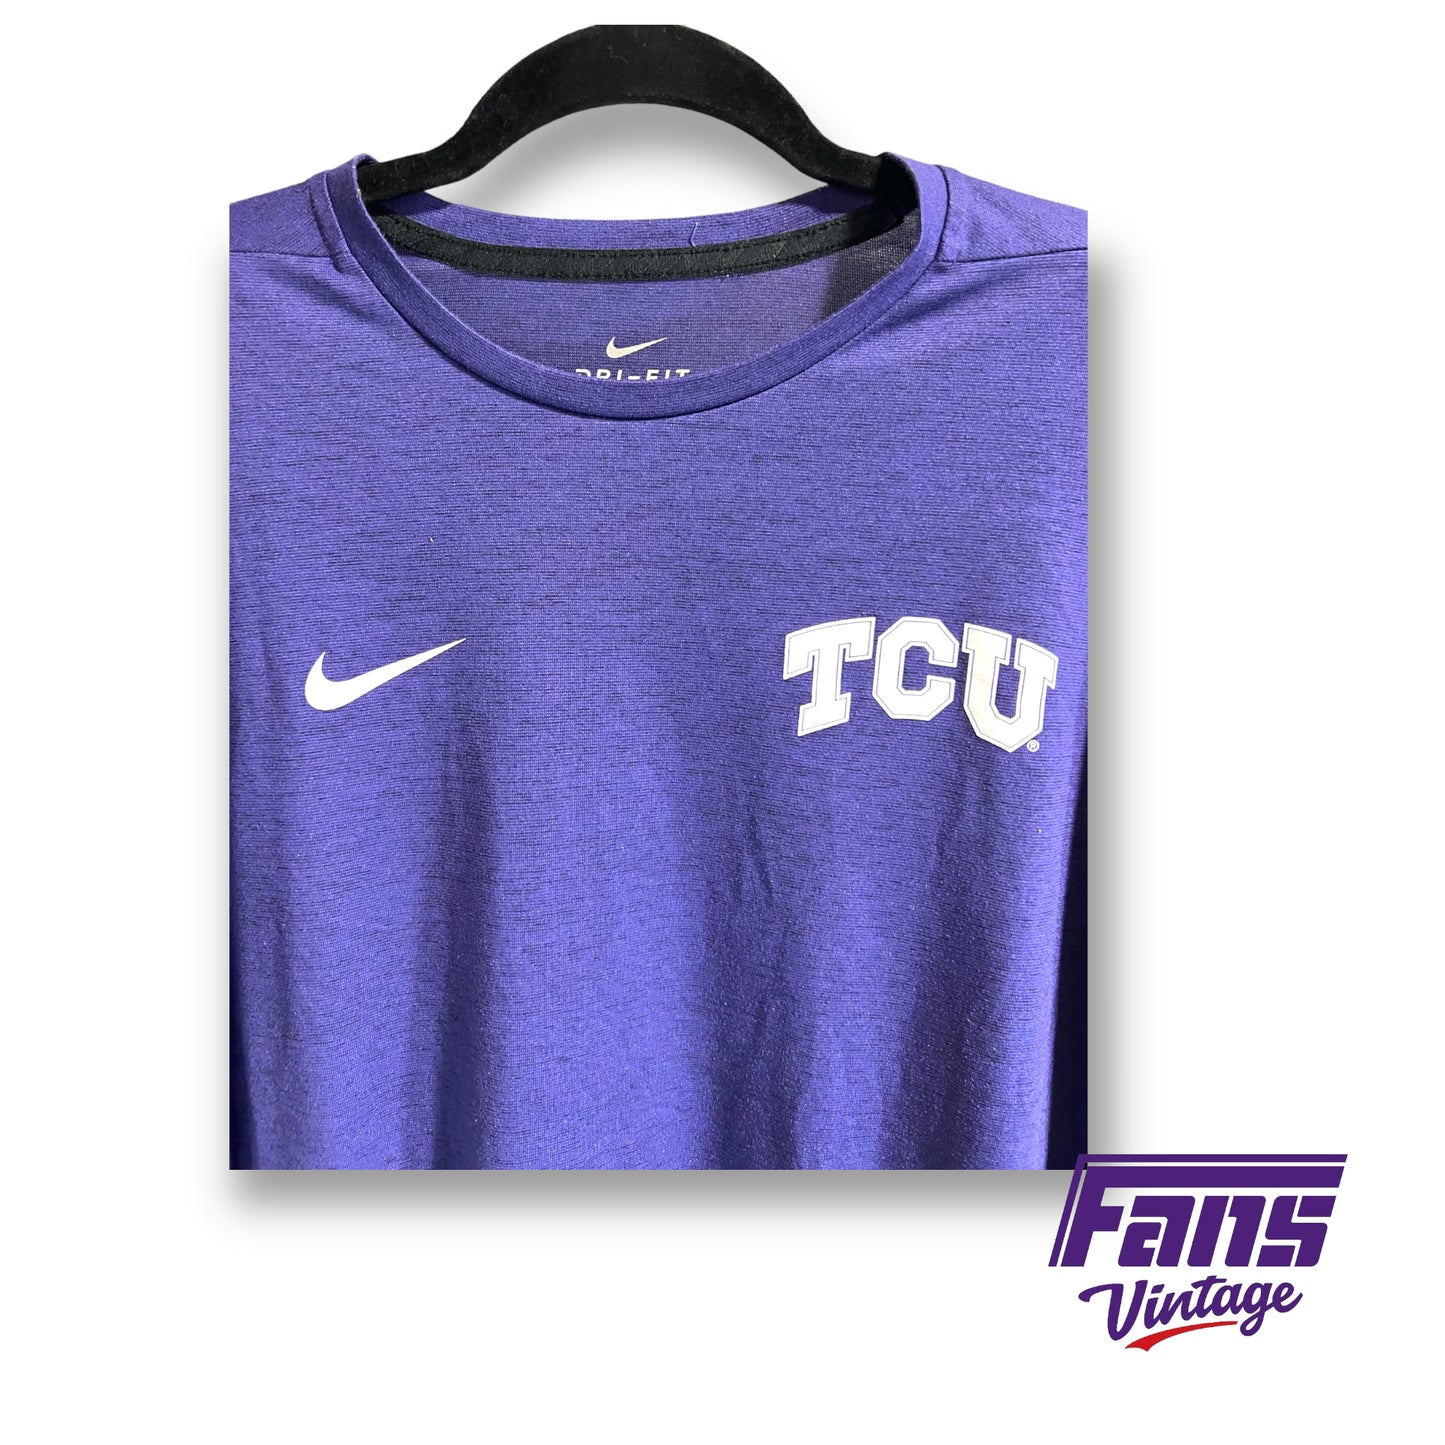 Premium Nike TCU team issued workout shirt